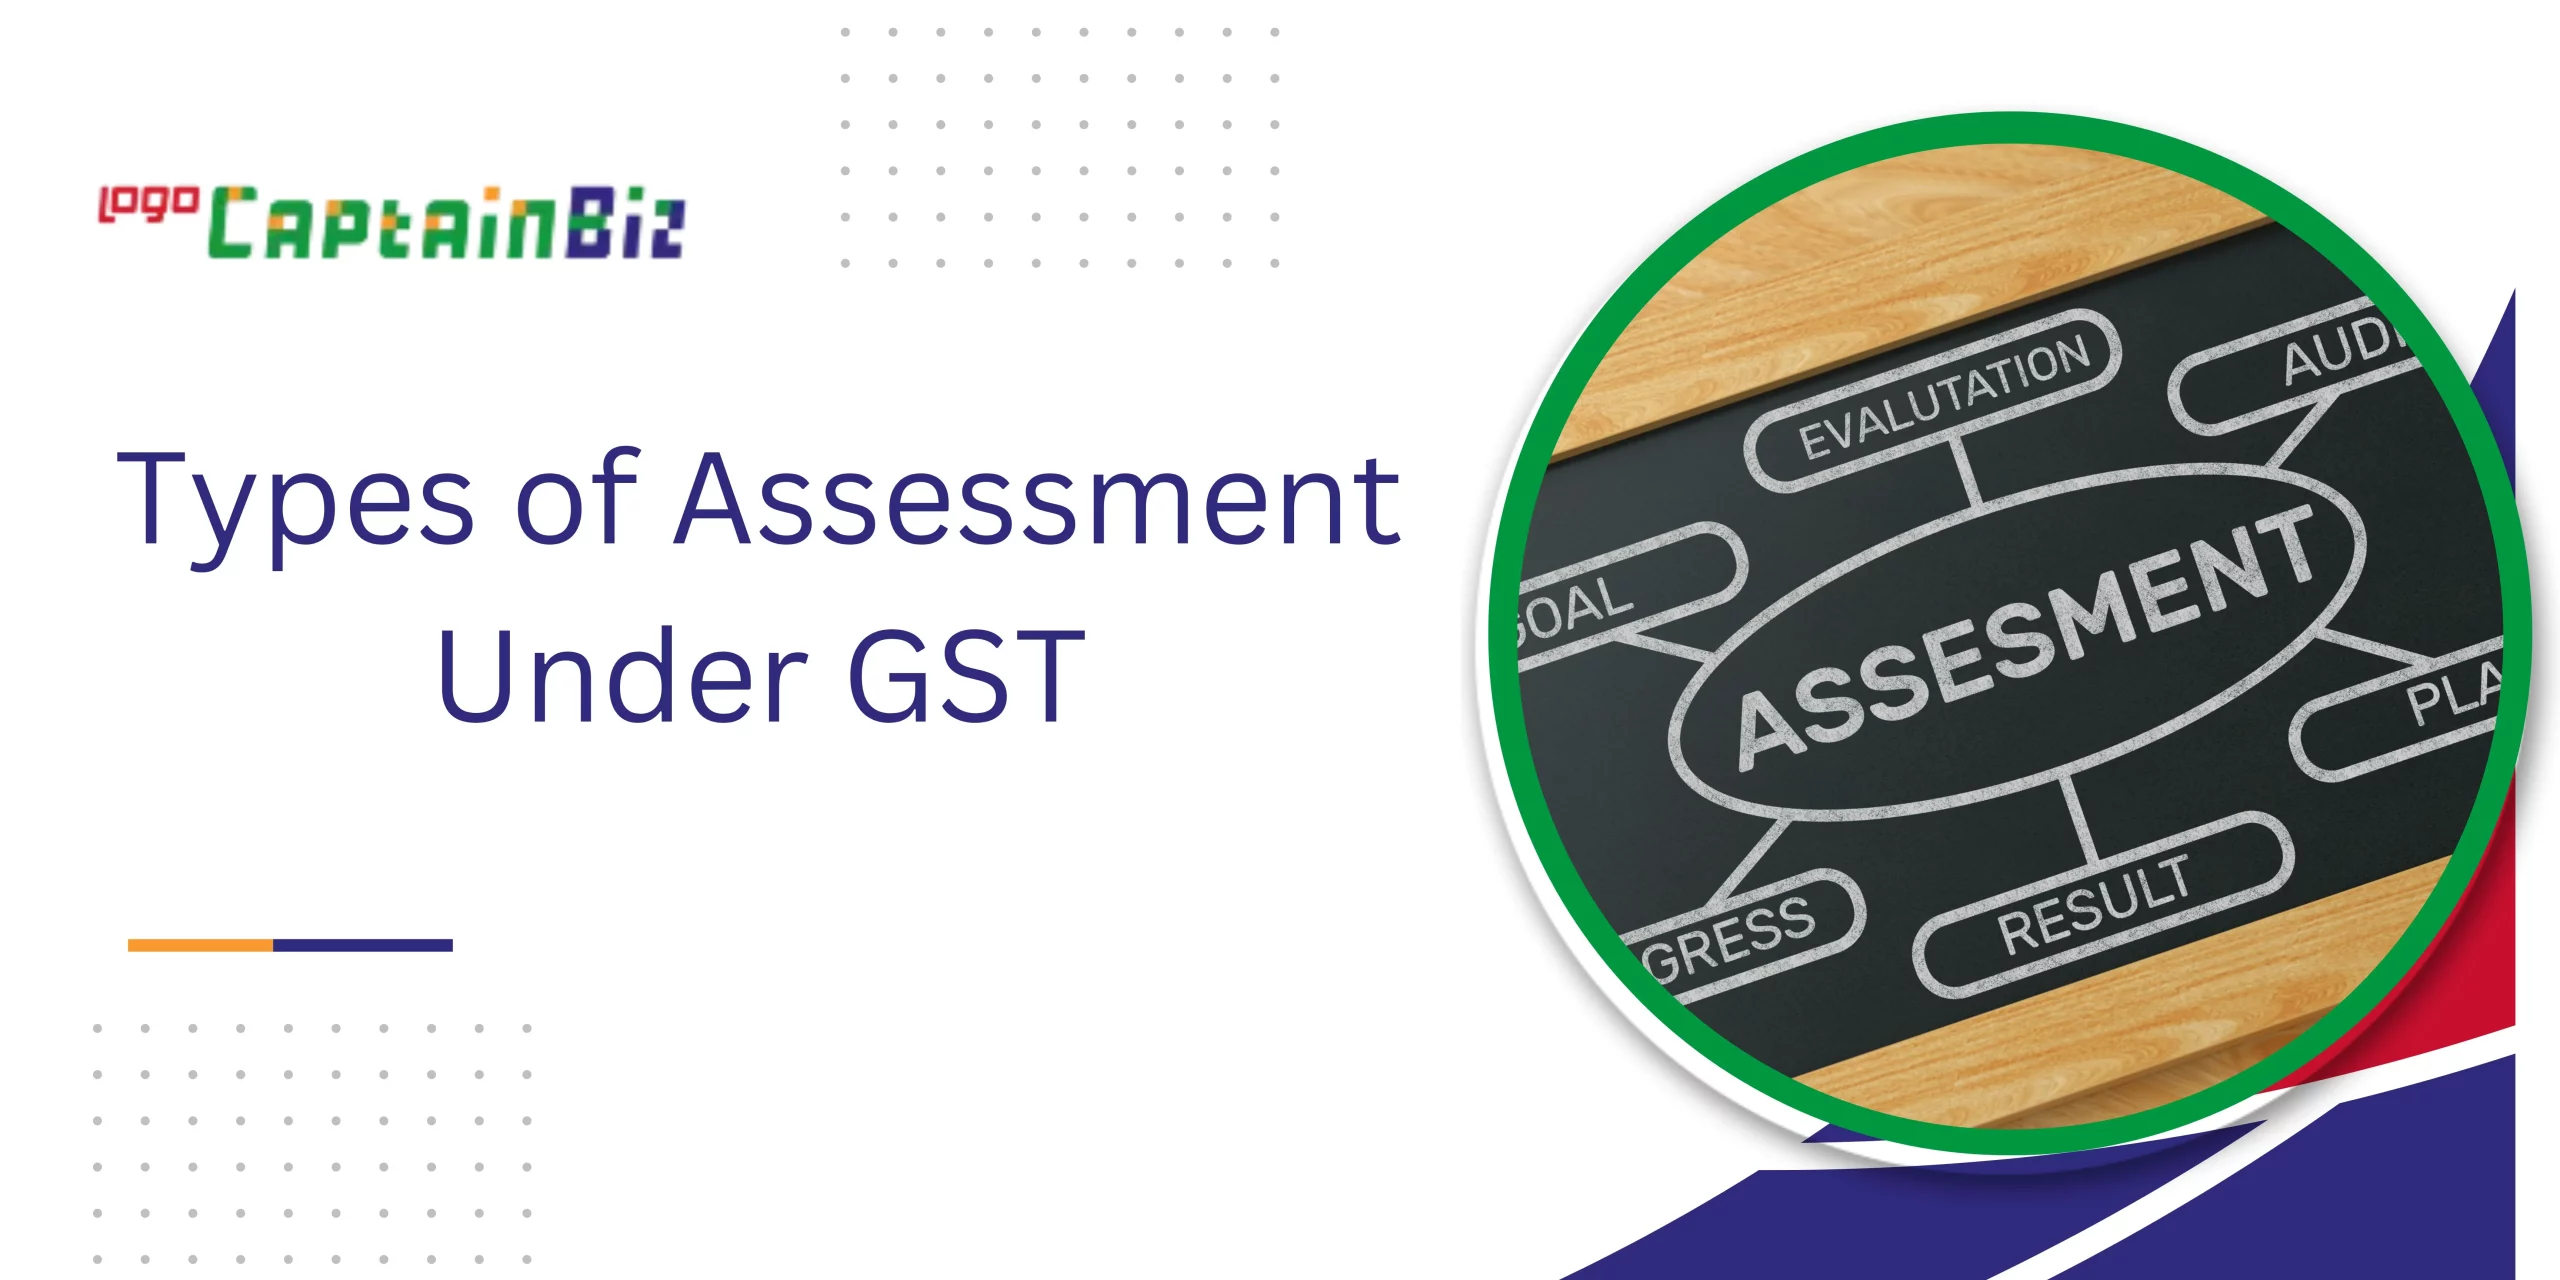 CaptainBiz: Types of Assessment Under GST